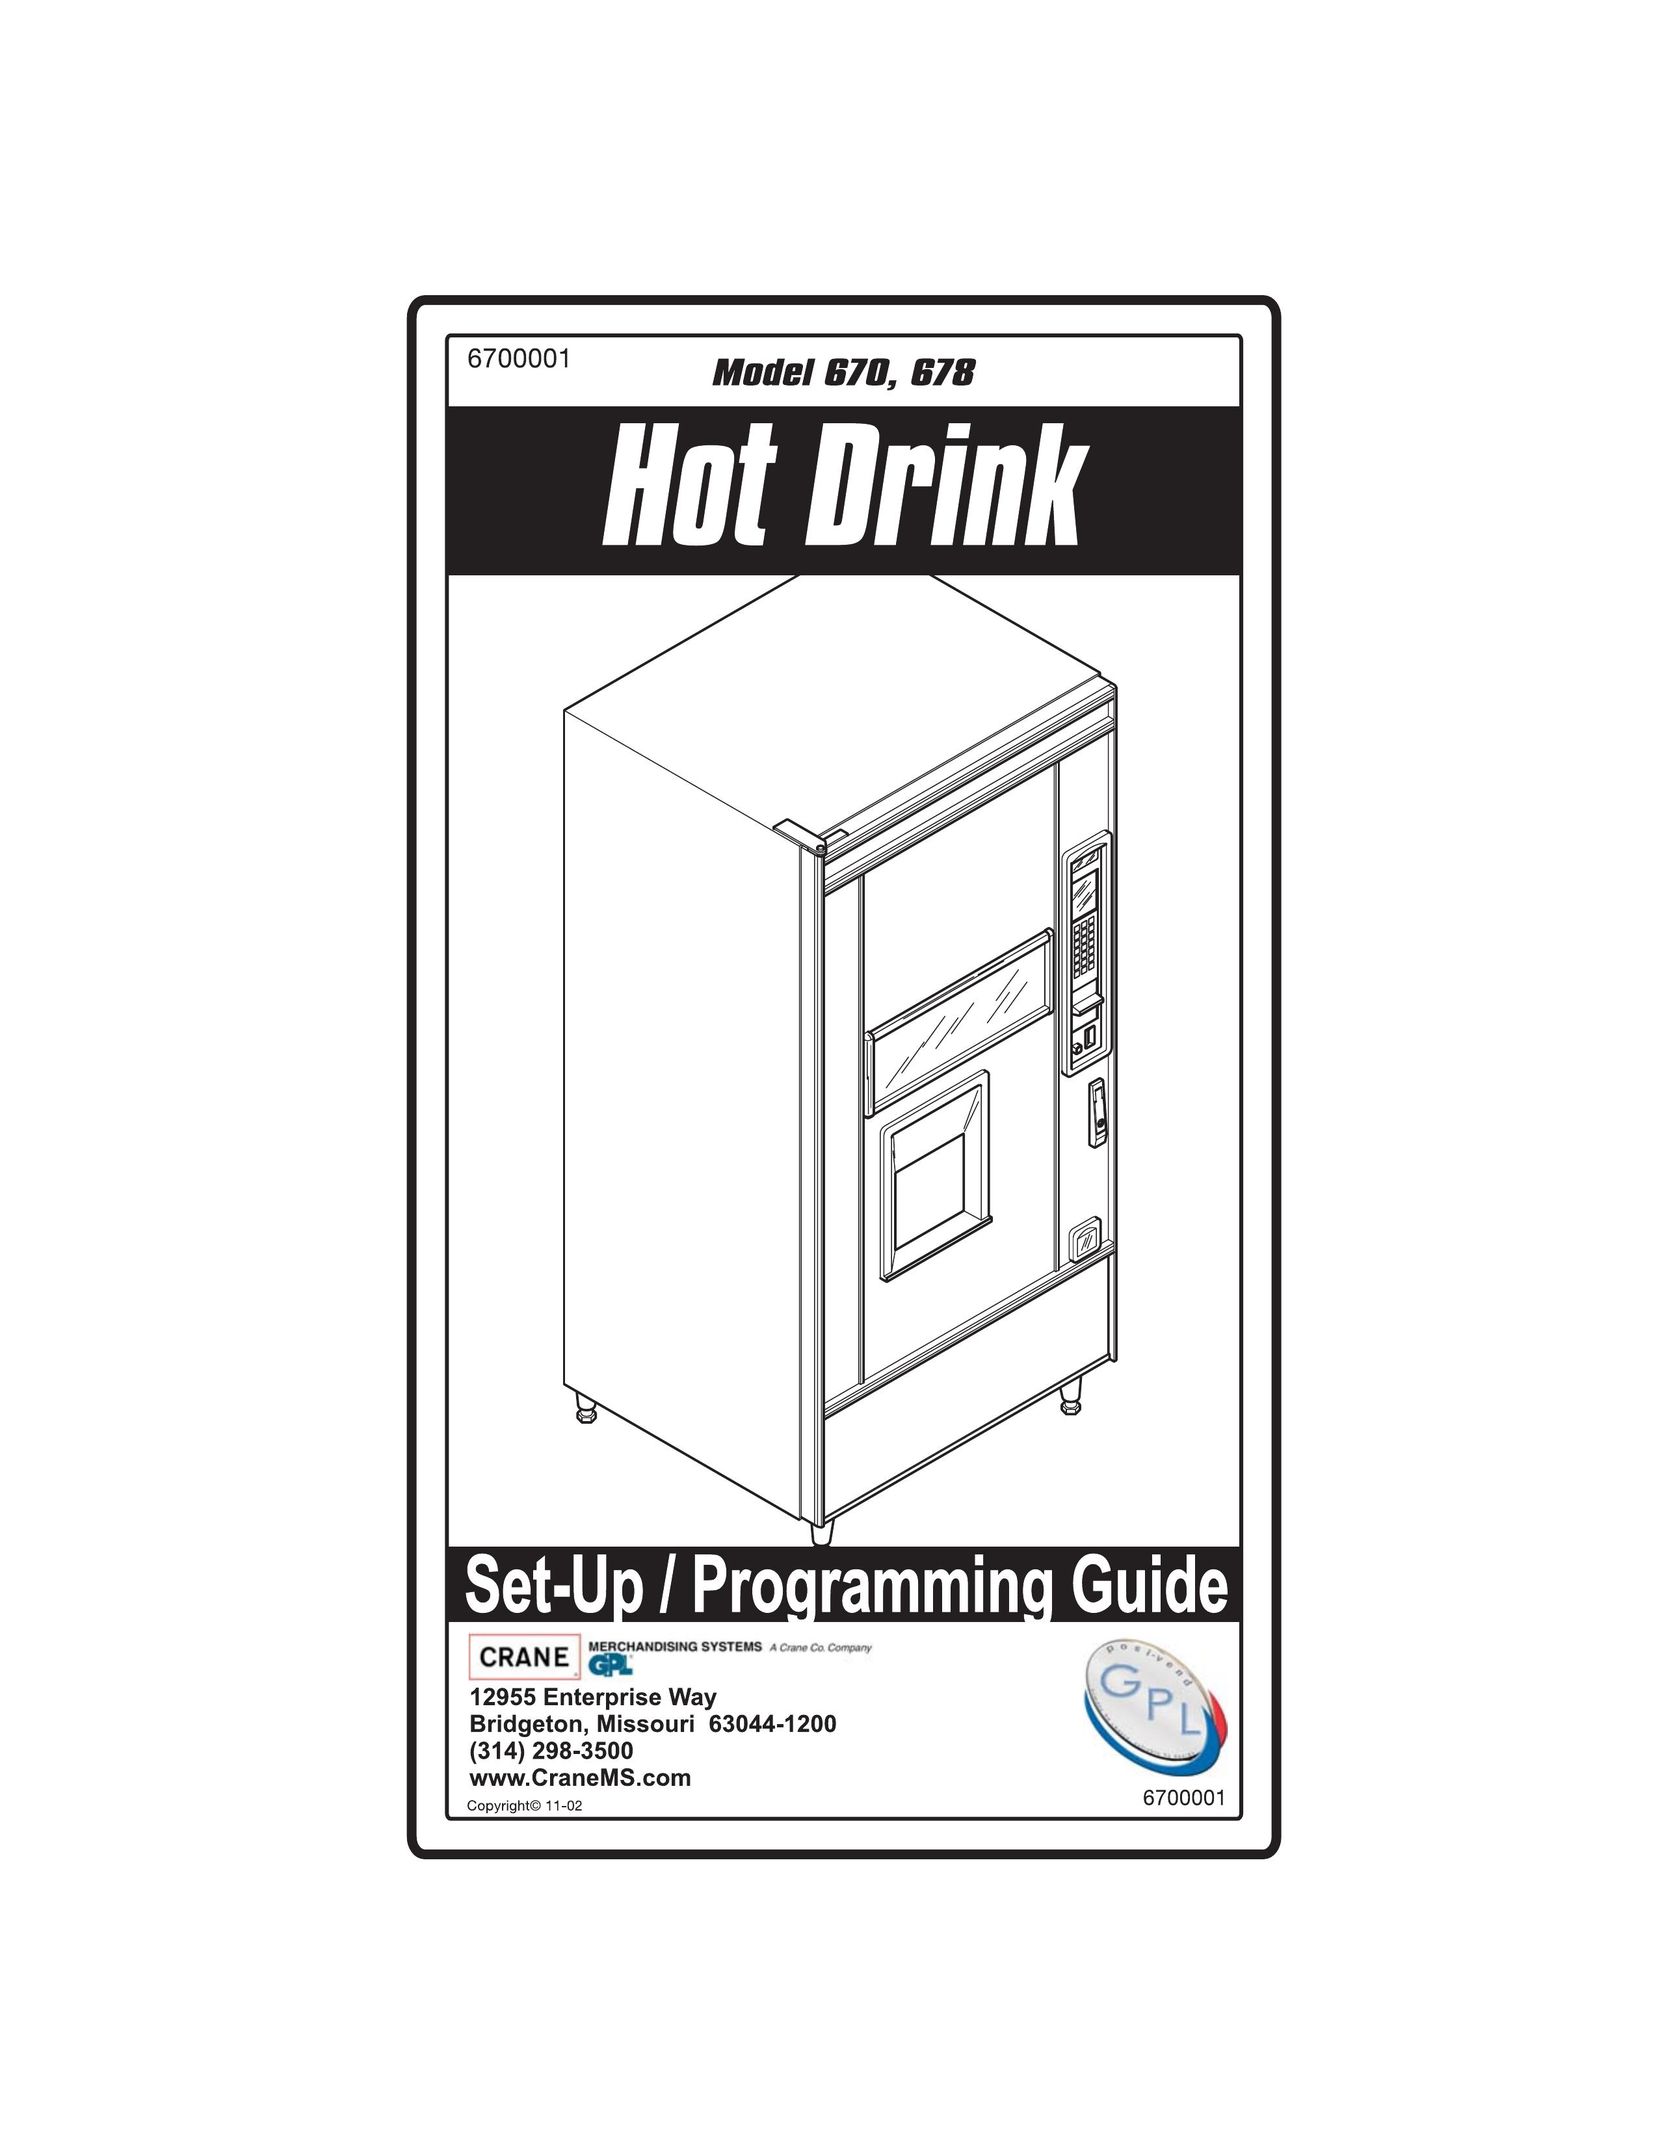 Crane Merchandising Systems 678 Hot Beverage Maker User Manual